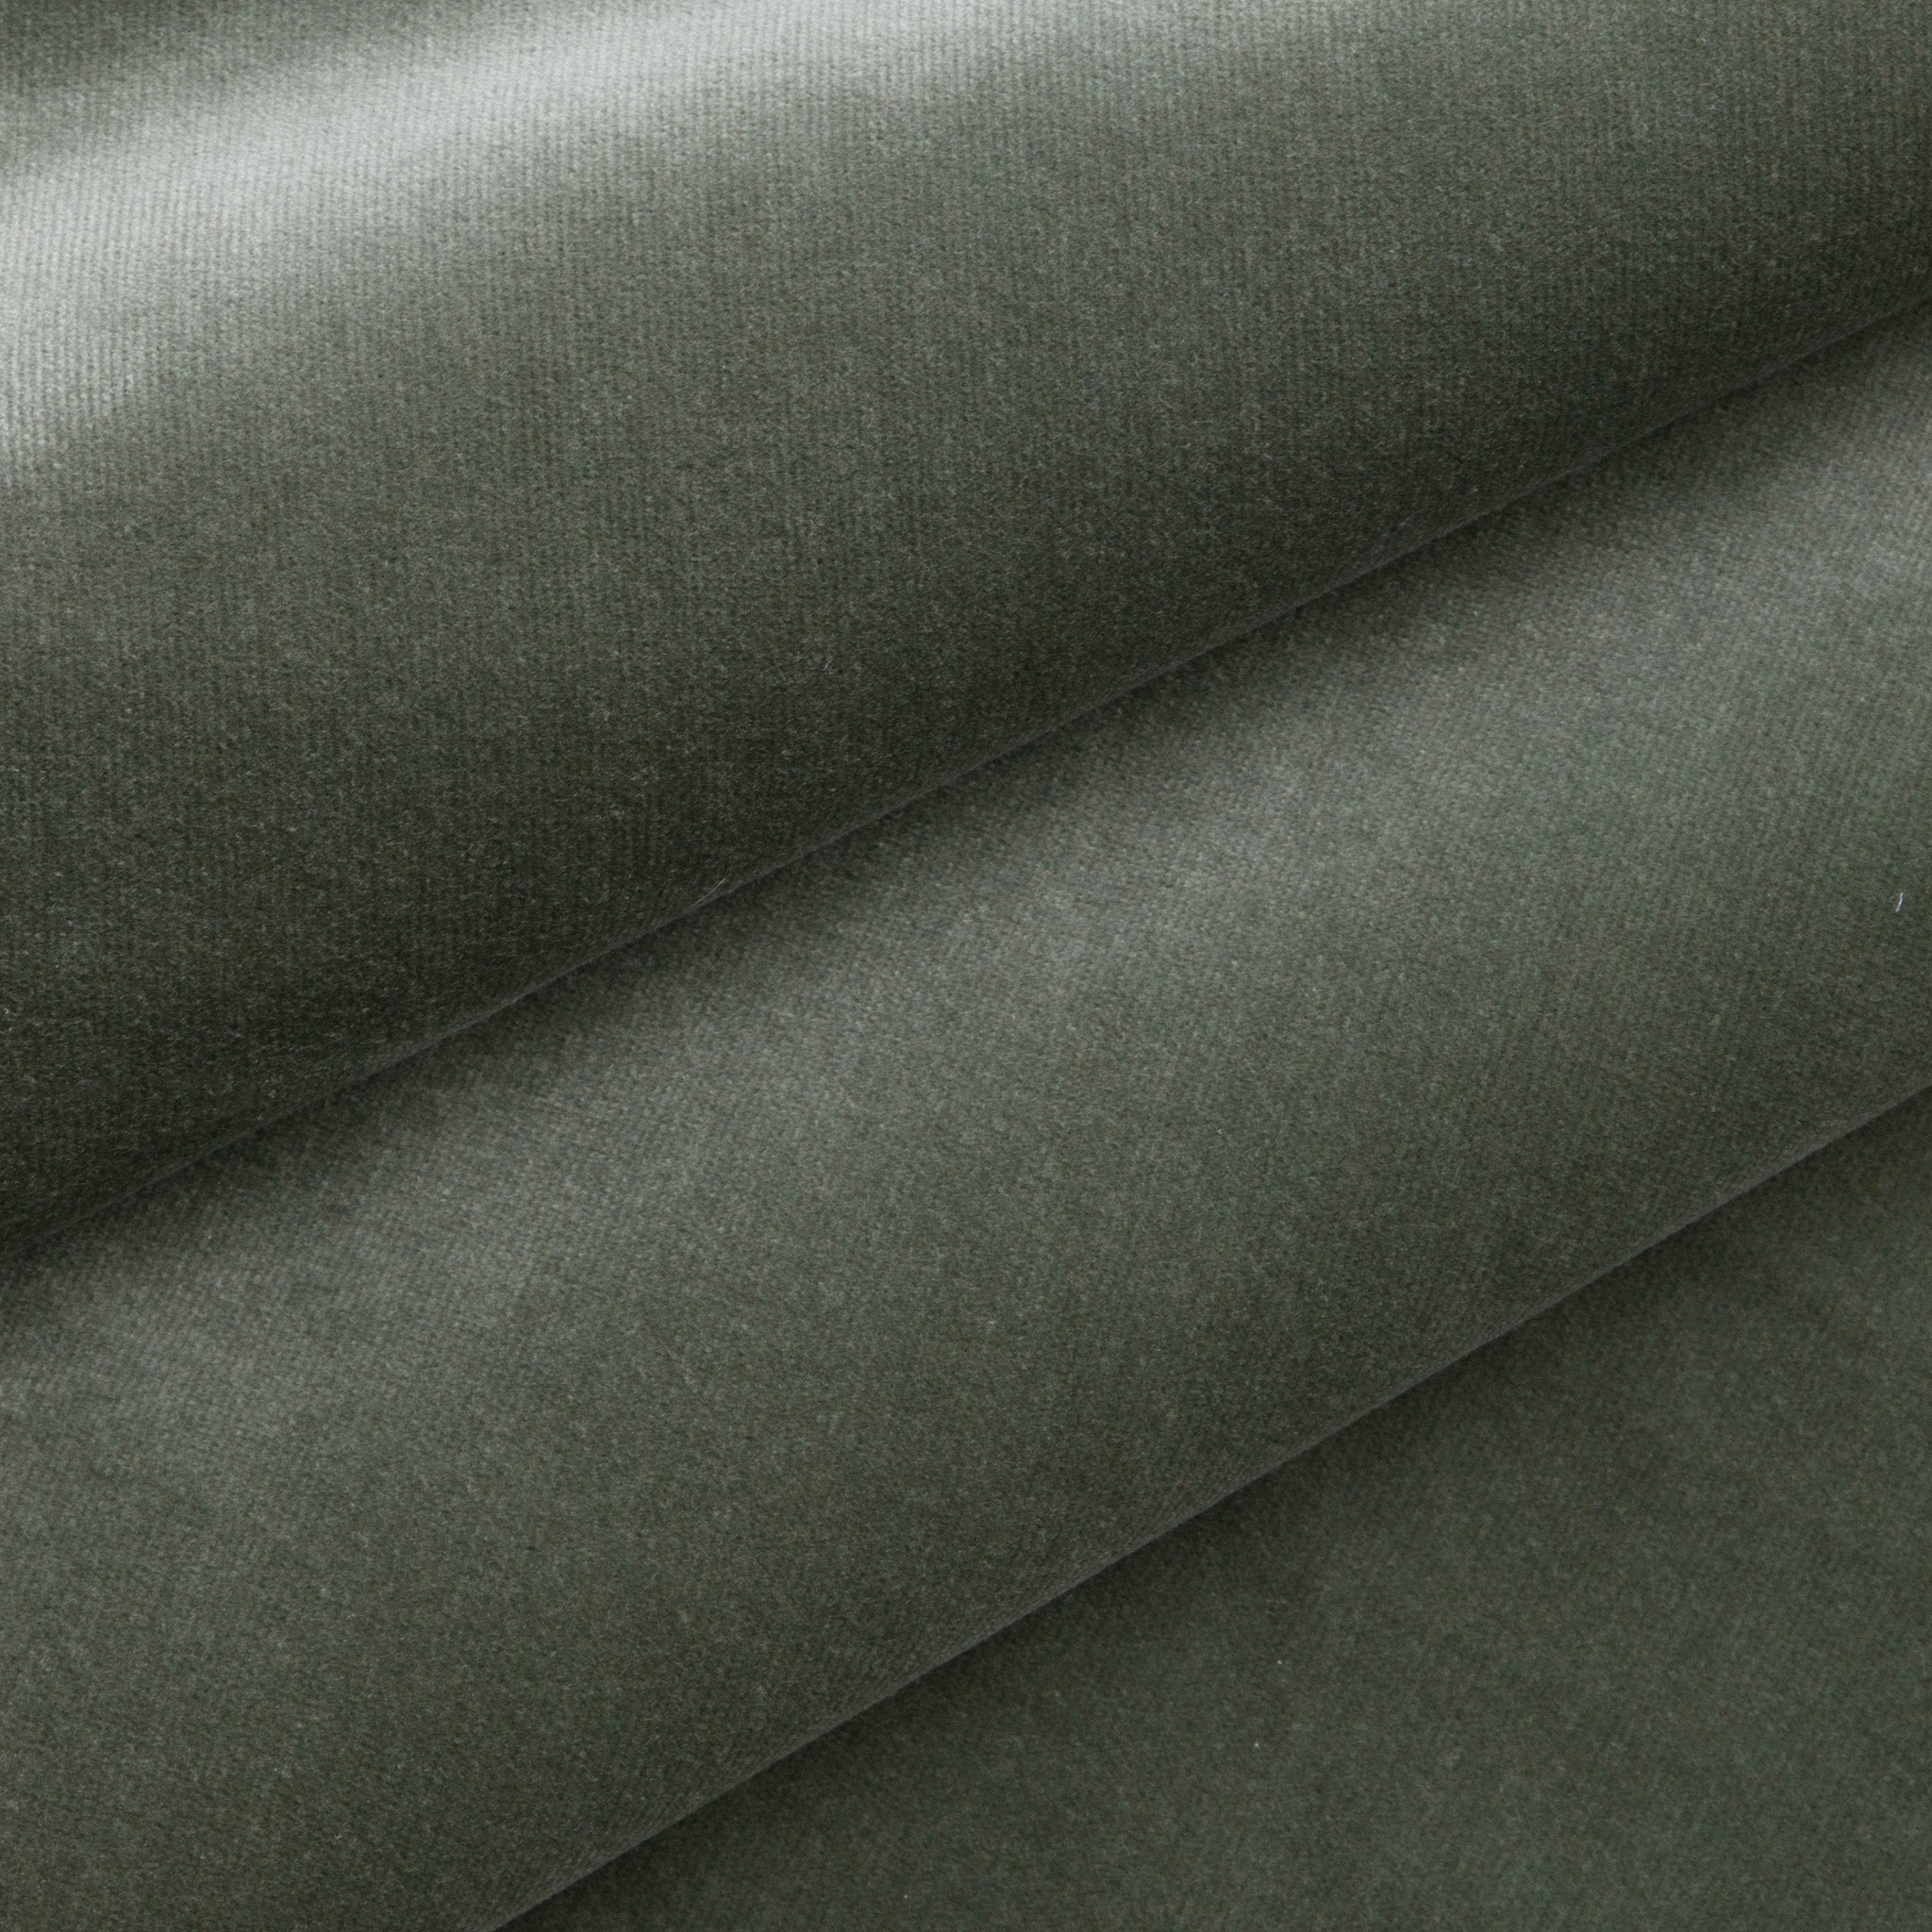 Fern Green Velvet Fabric Close-Up